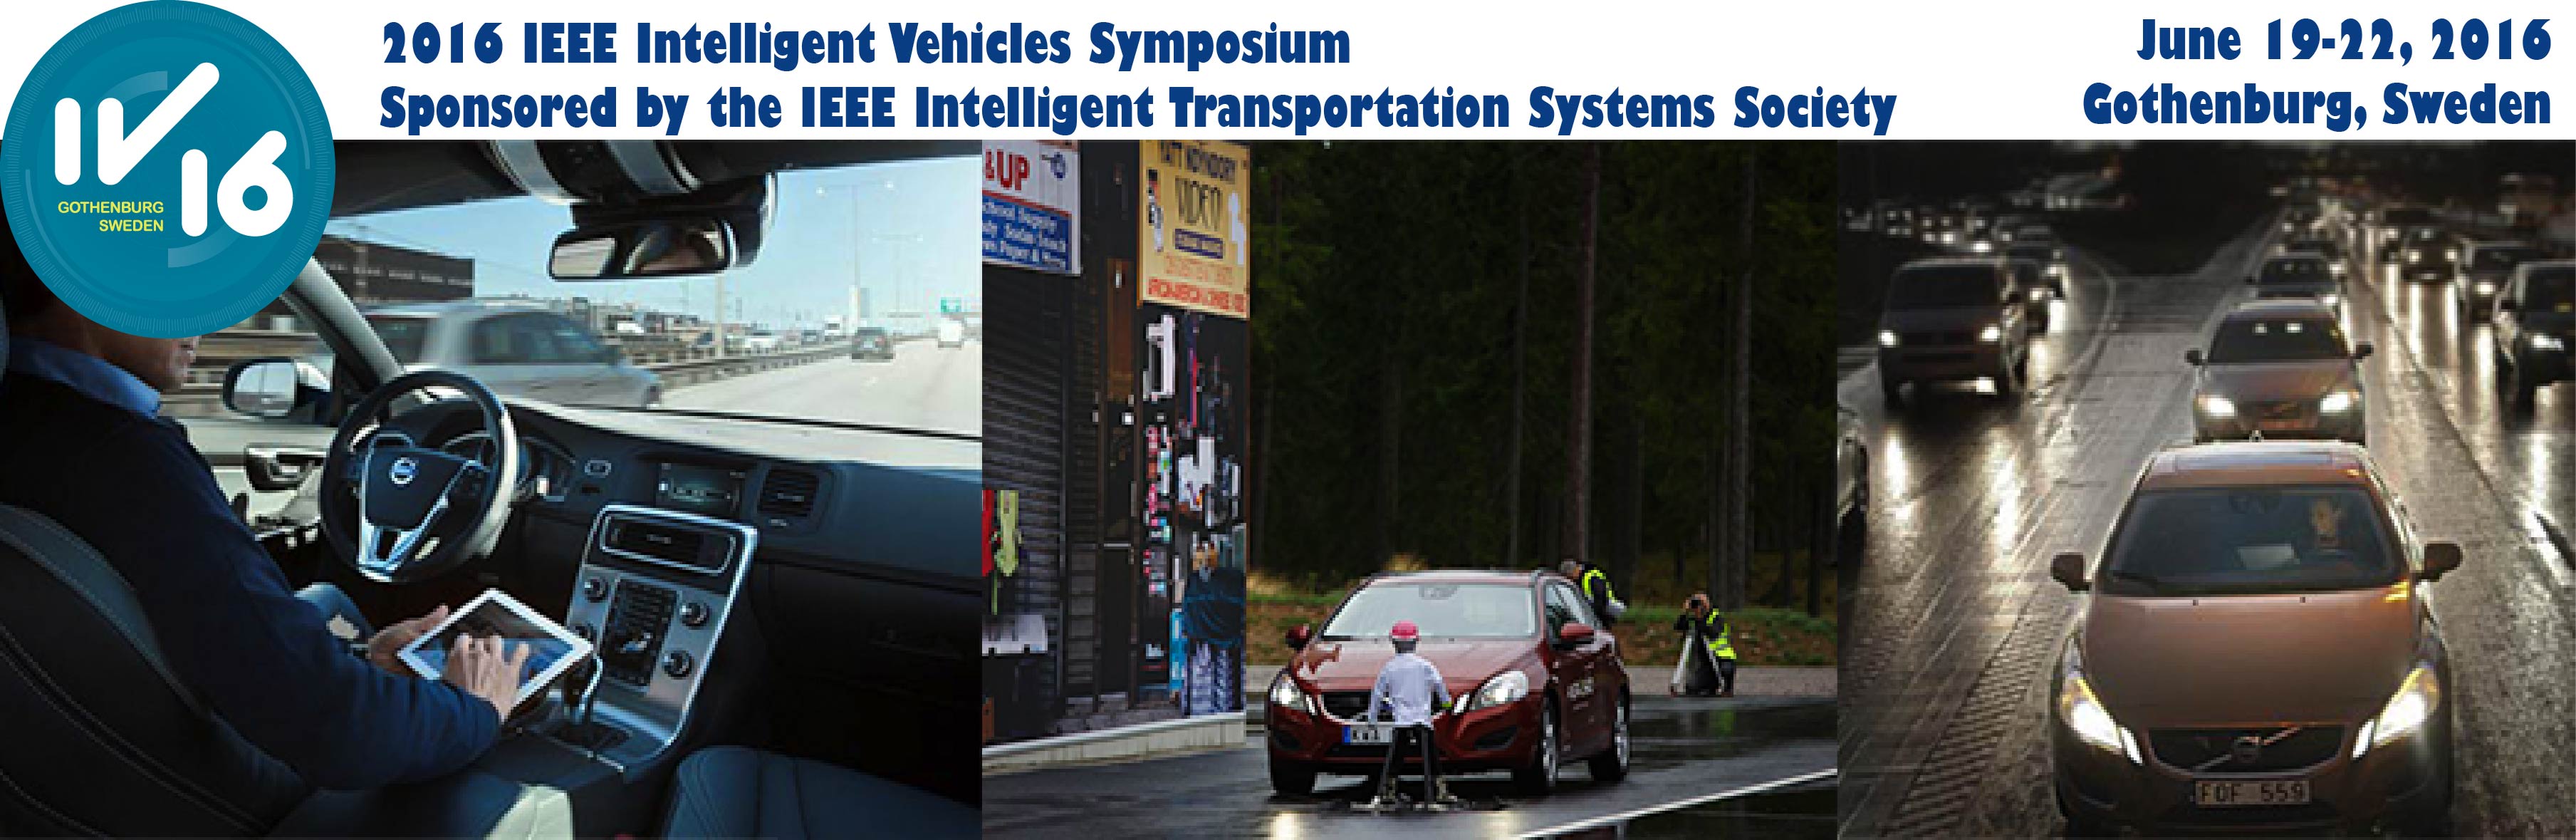 2016 IEEE Intelligent Vehicles Symposium